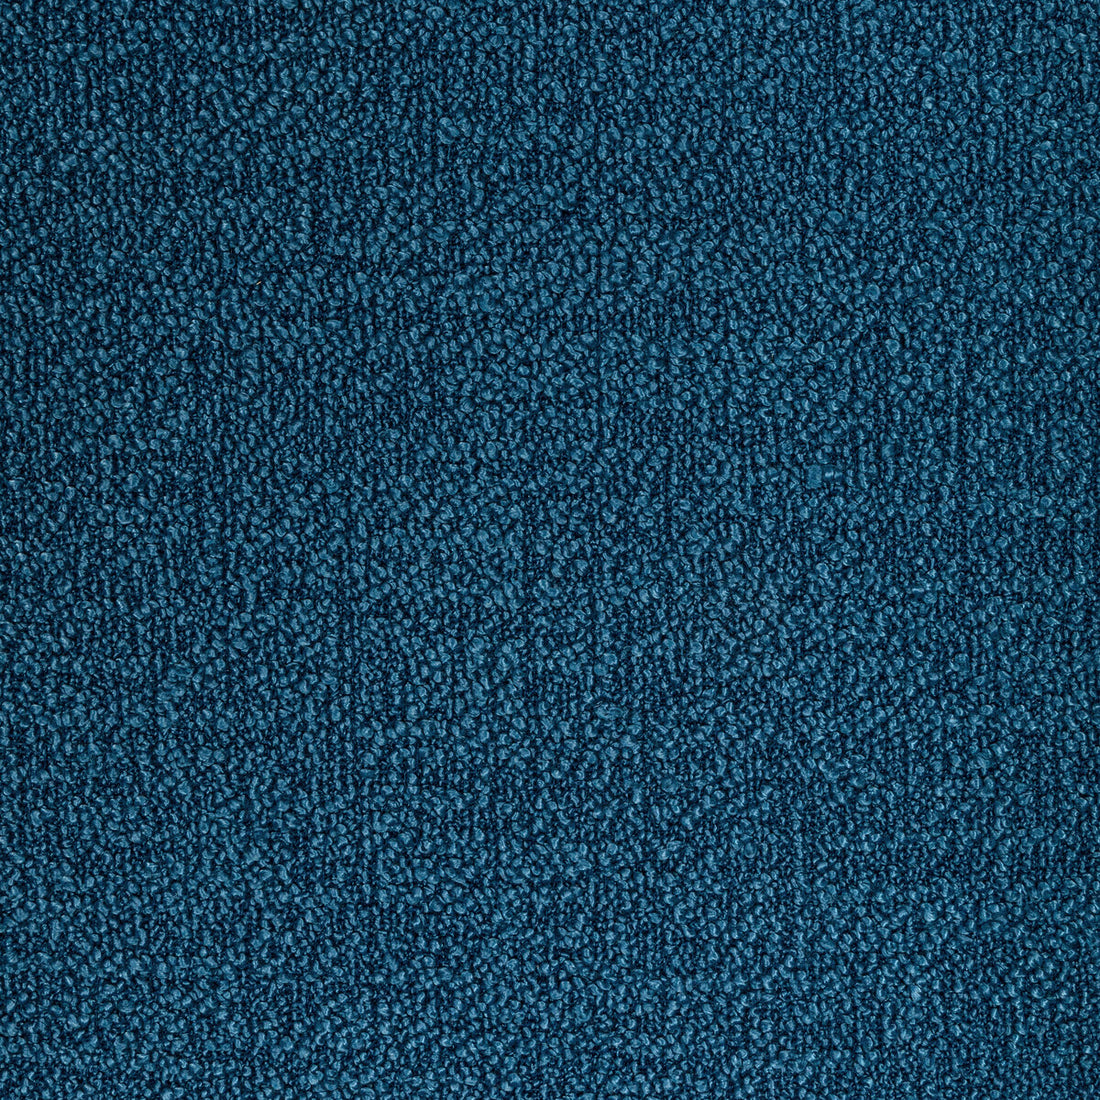 Kravet Smart fabric in 36857-5 color - pattern 36857.5.0 - by Kravet Smart in the Performance Kravetarmor collection